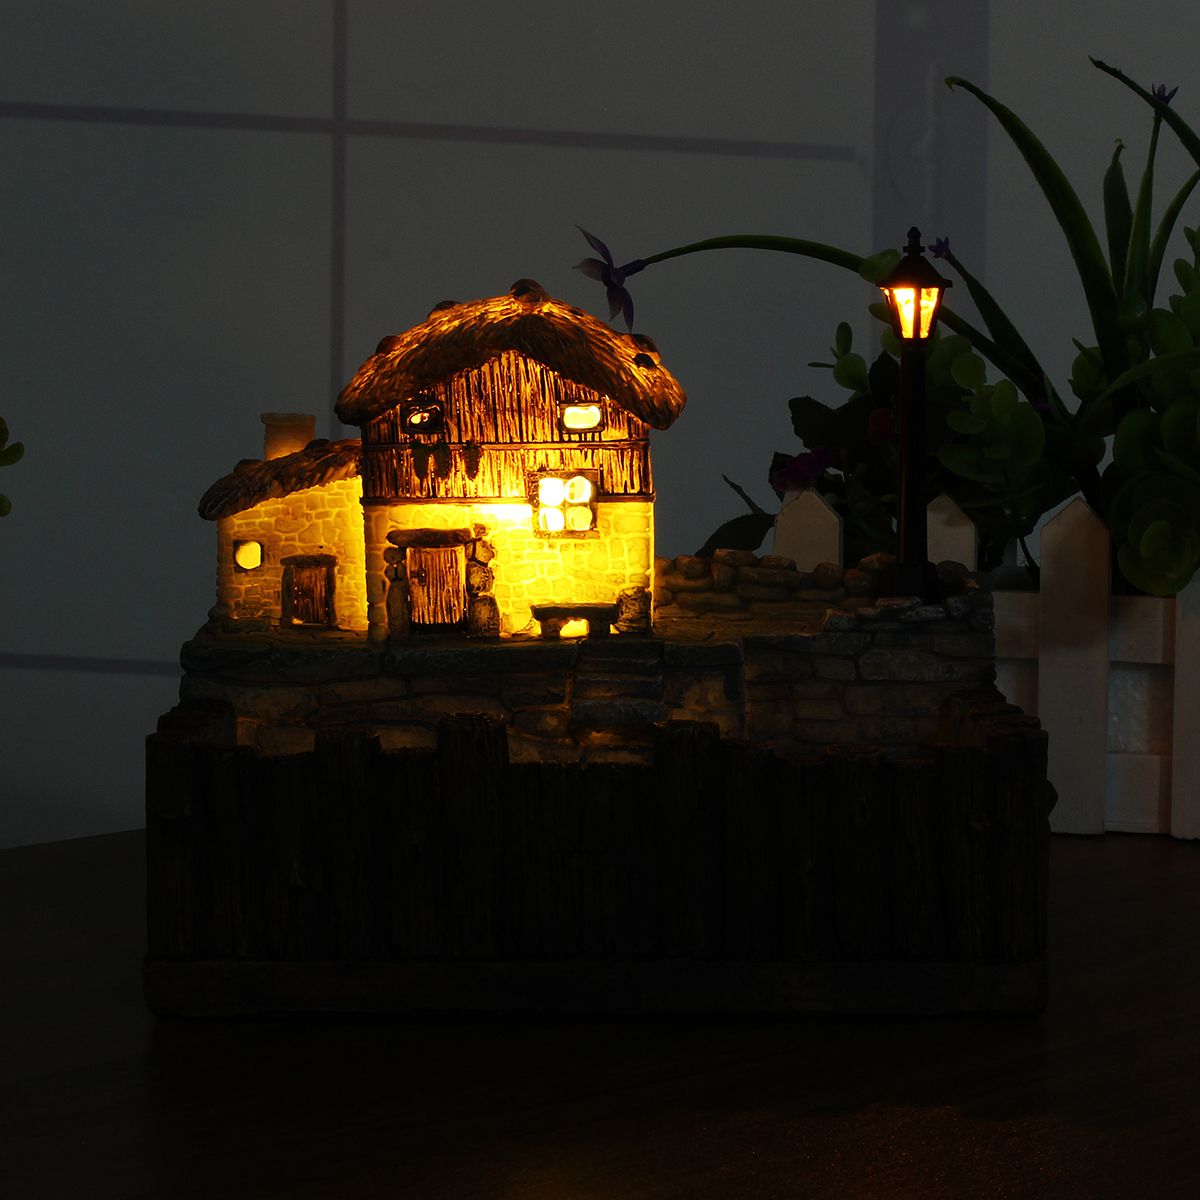 Lighting-Glasses-Cabin-Pot-Craft-Ornaments-Magic-Lantern-House-Planter-Bonsai-Decorations-1474030